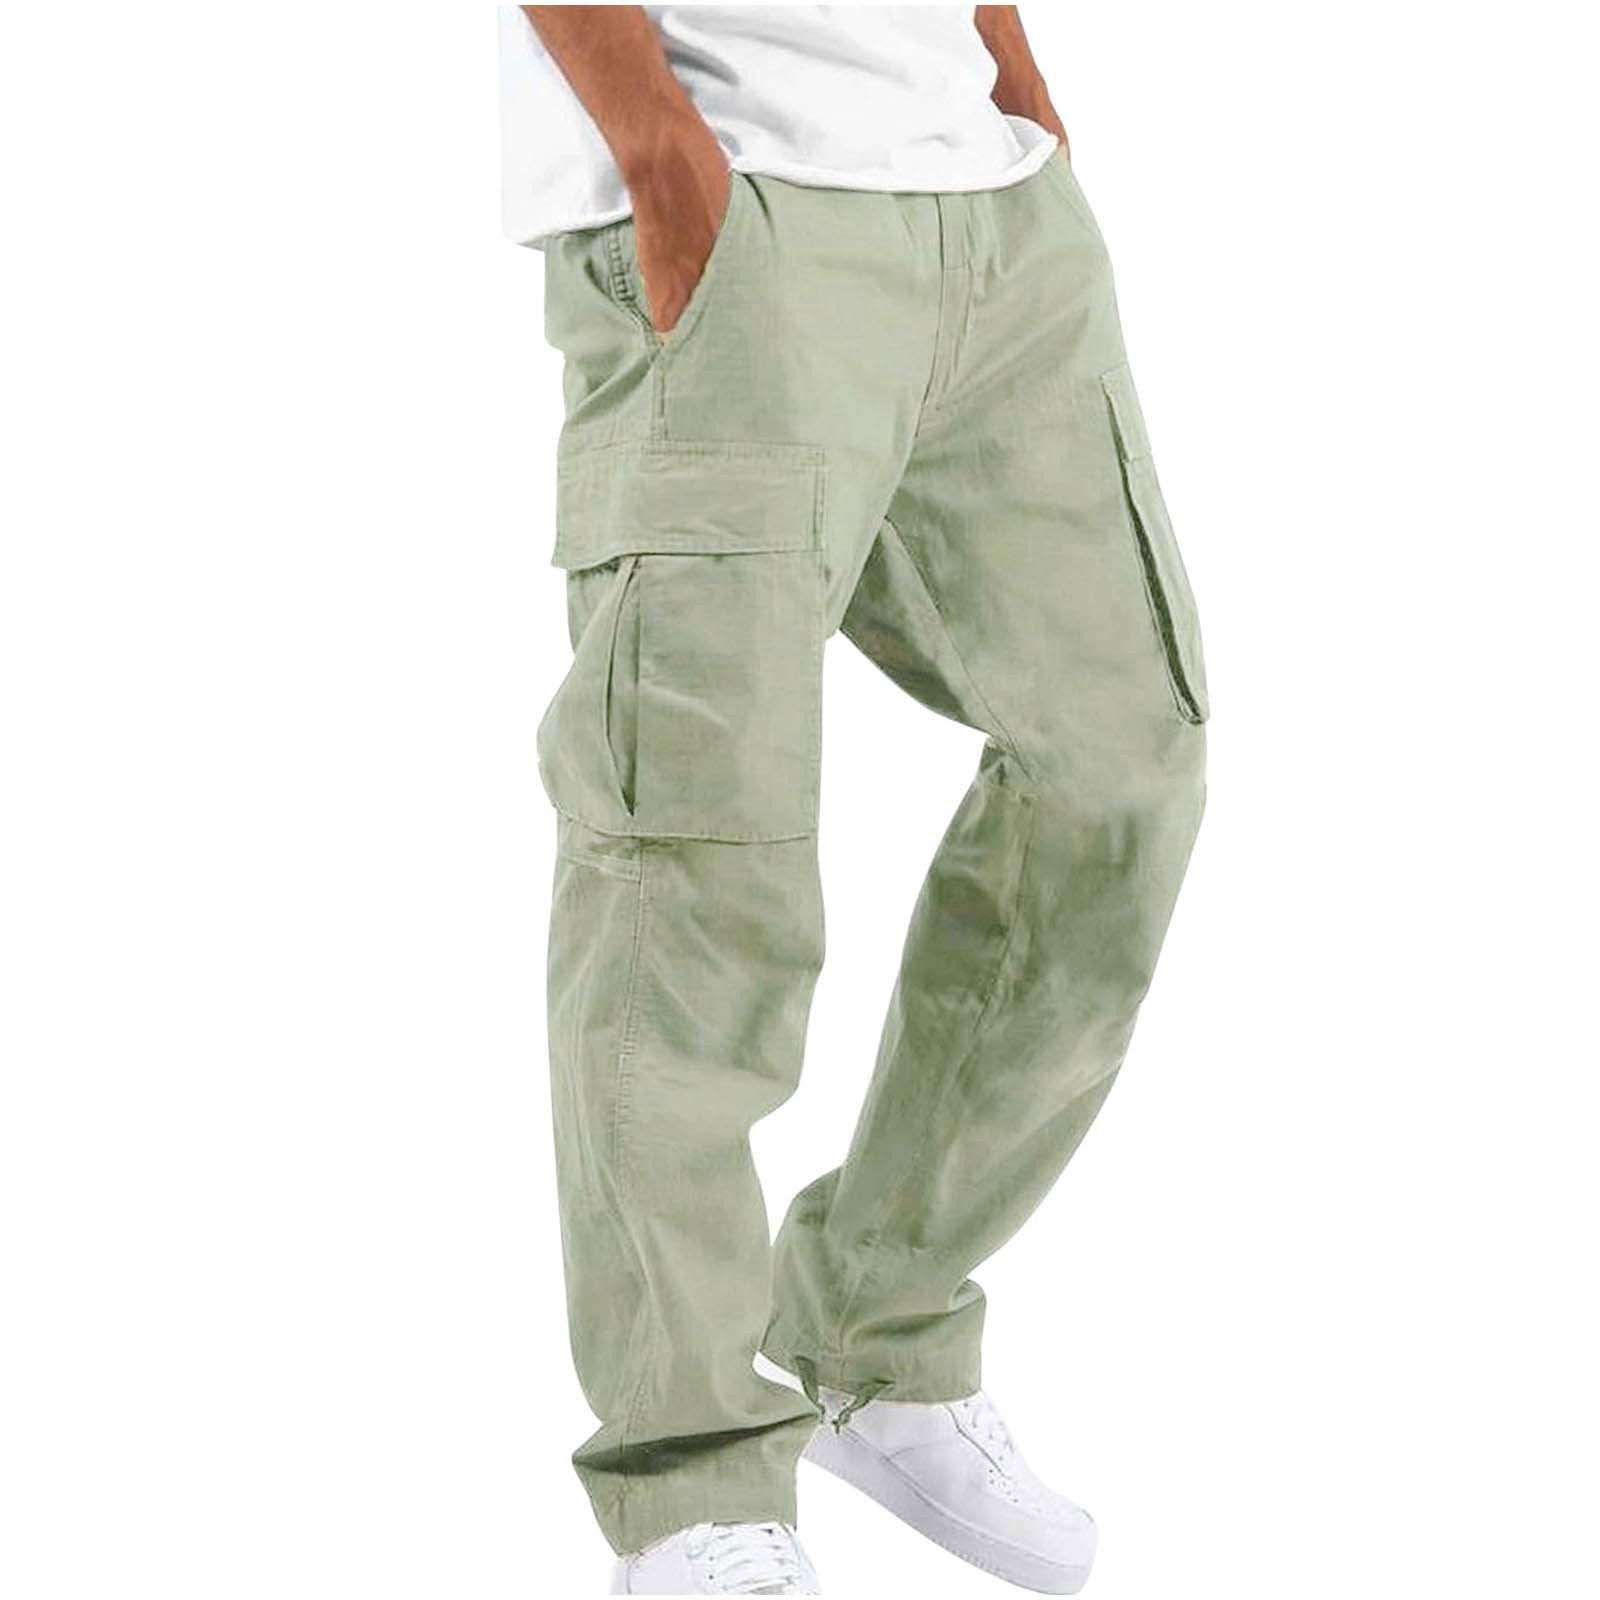 Functional Men's Workwear Pants: Drawstring, Multi-Pocket Design - HalleBeauty